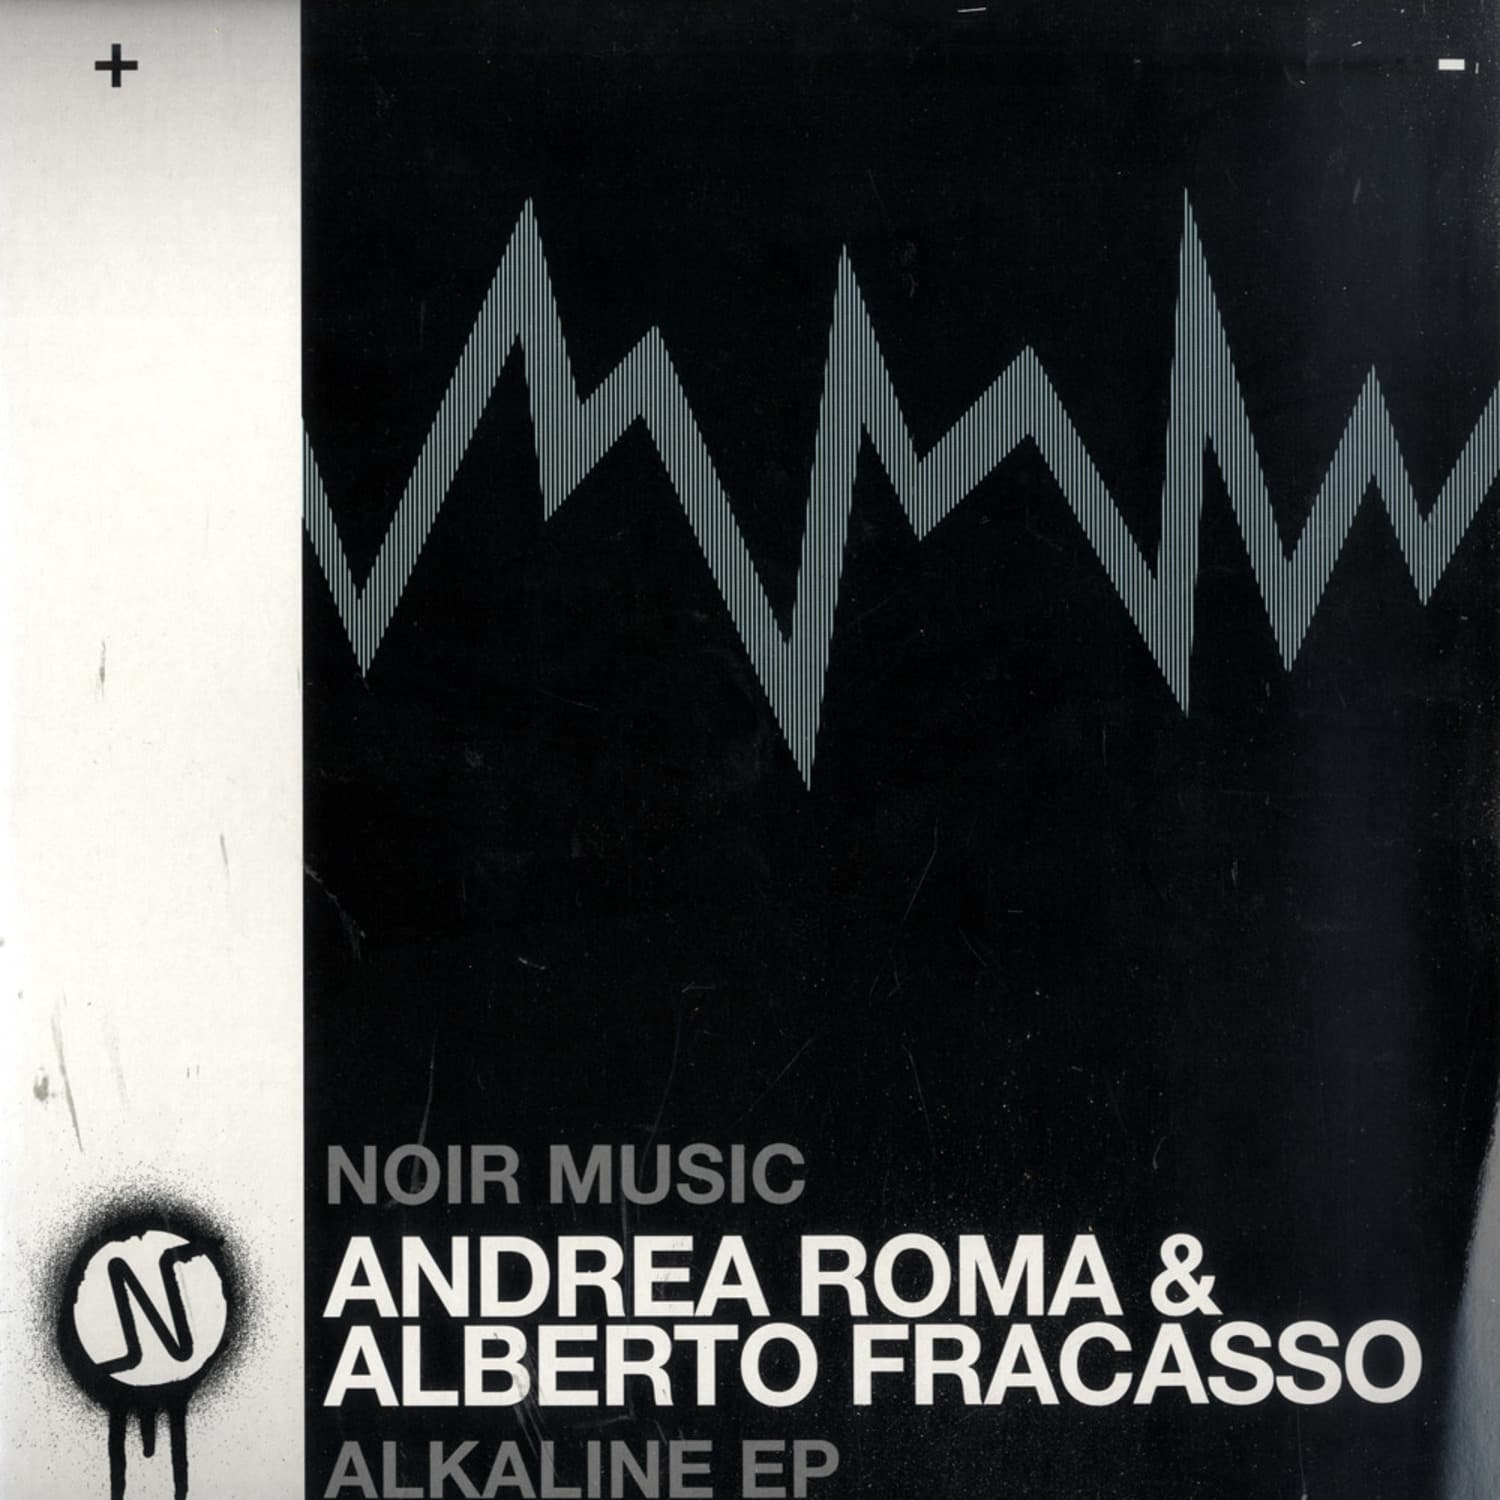 Andrea Roma & Alberto Fracasso - ALKALINE EP